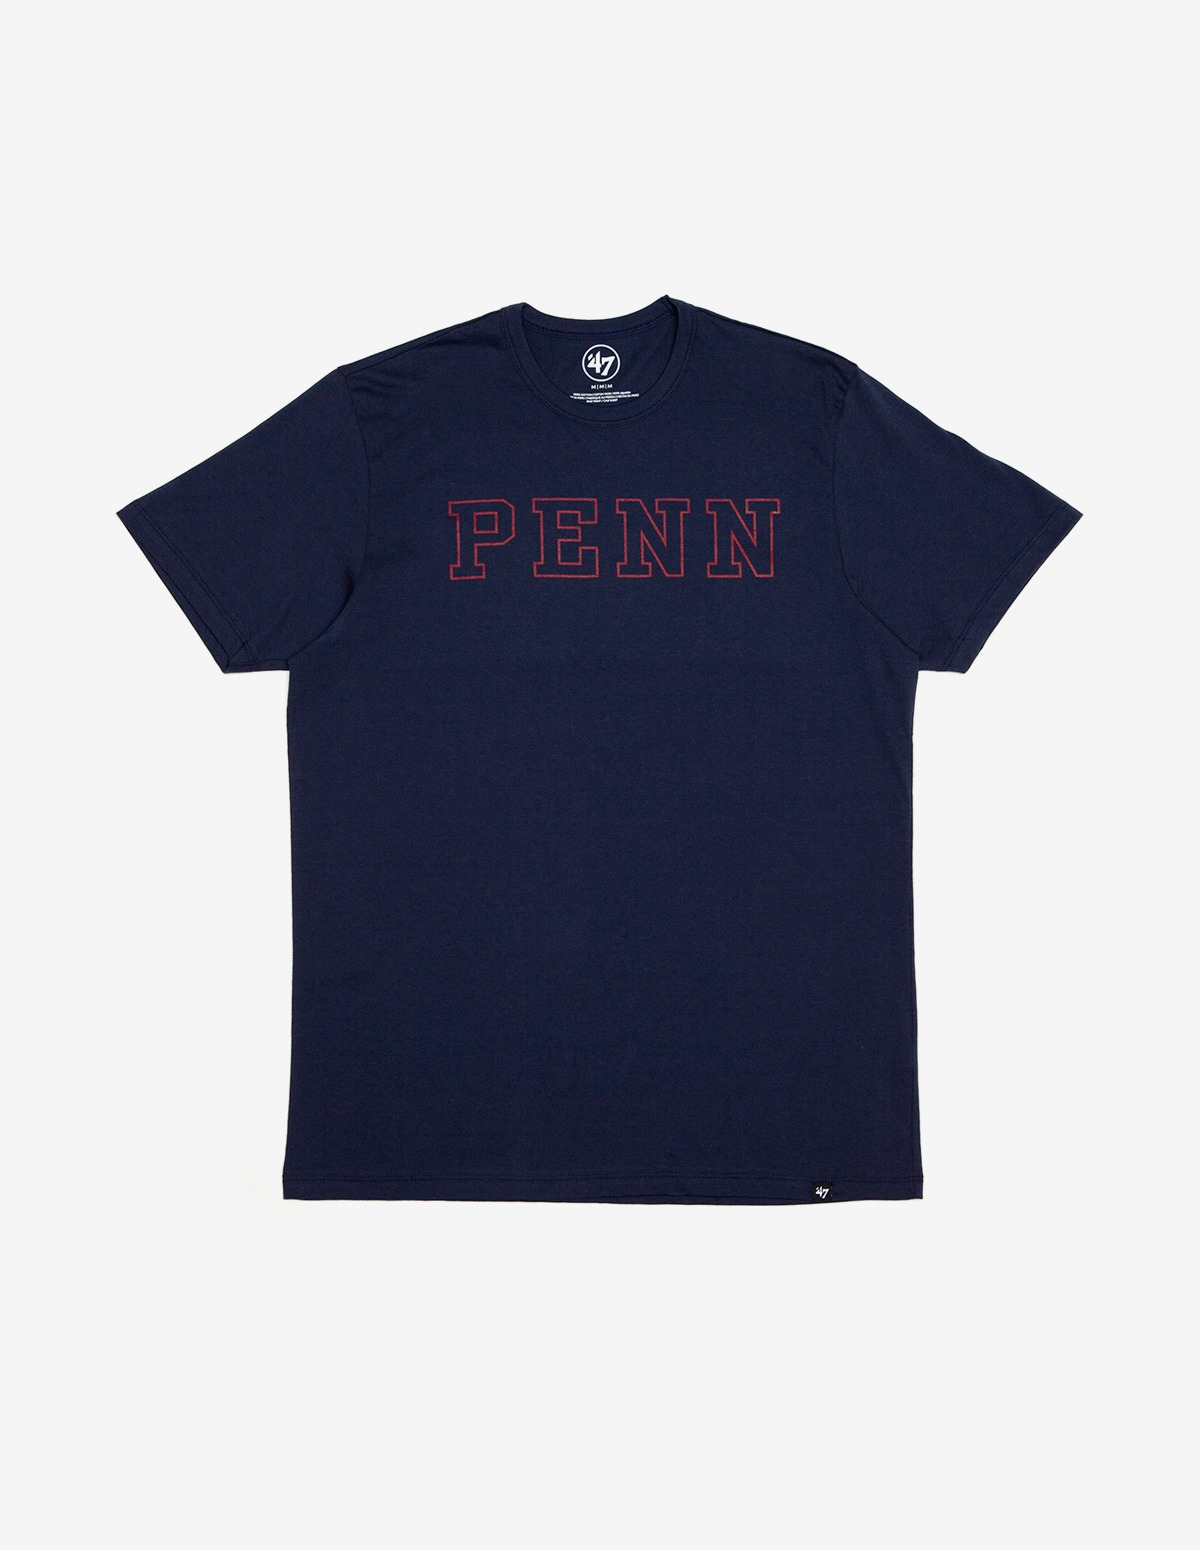 University T-Shirt : PENN